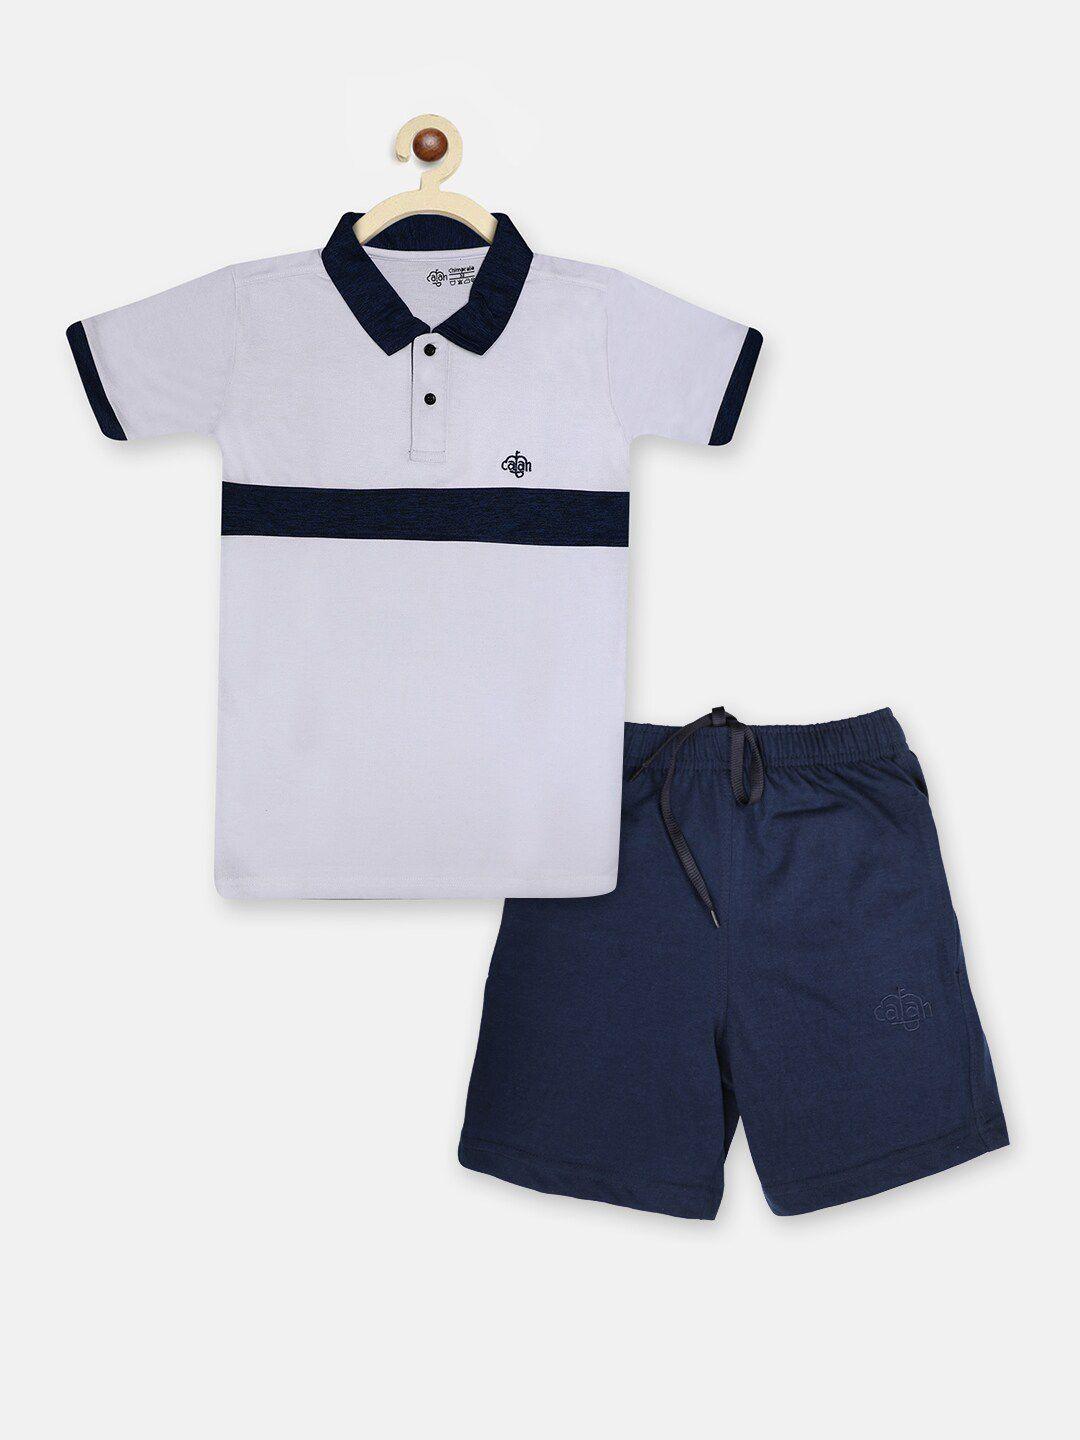 CHIMPRALA Boys Navy Blue & Off White Colourblocked T-shirt with Shorts